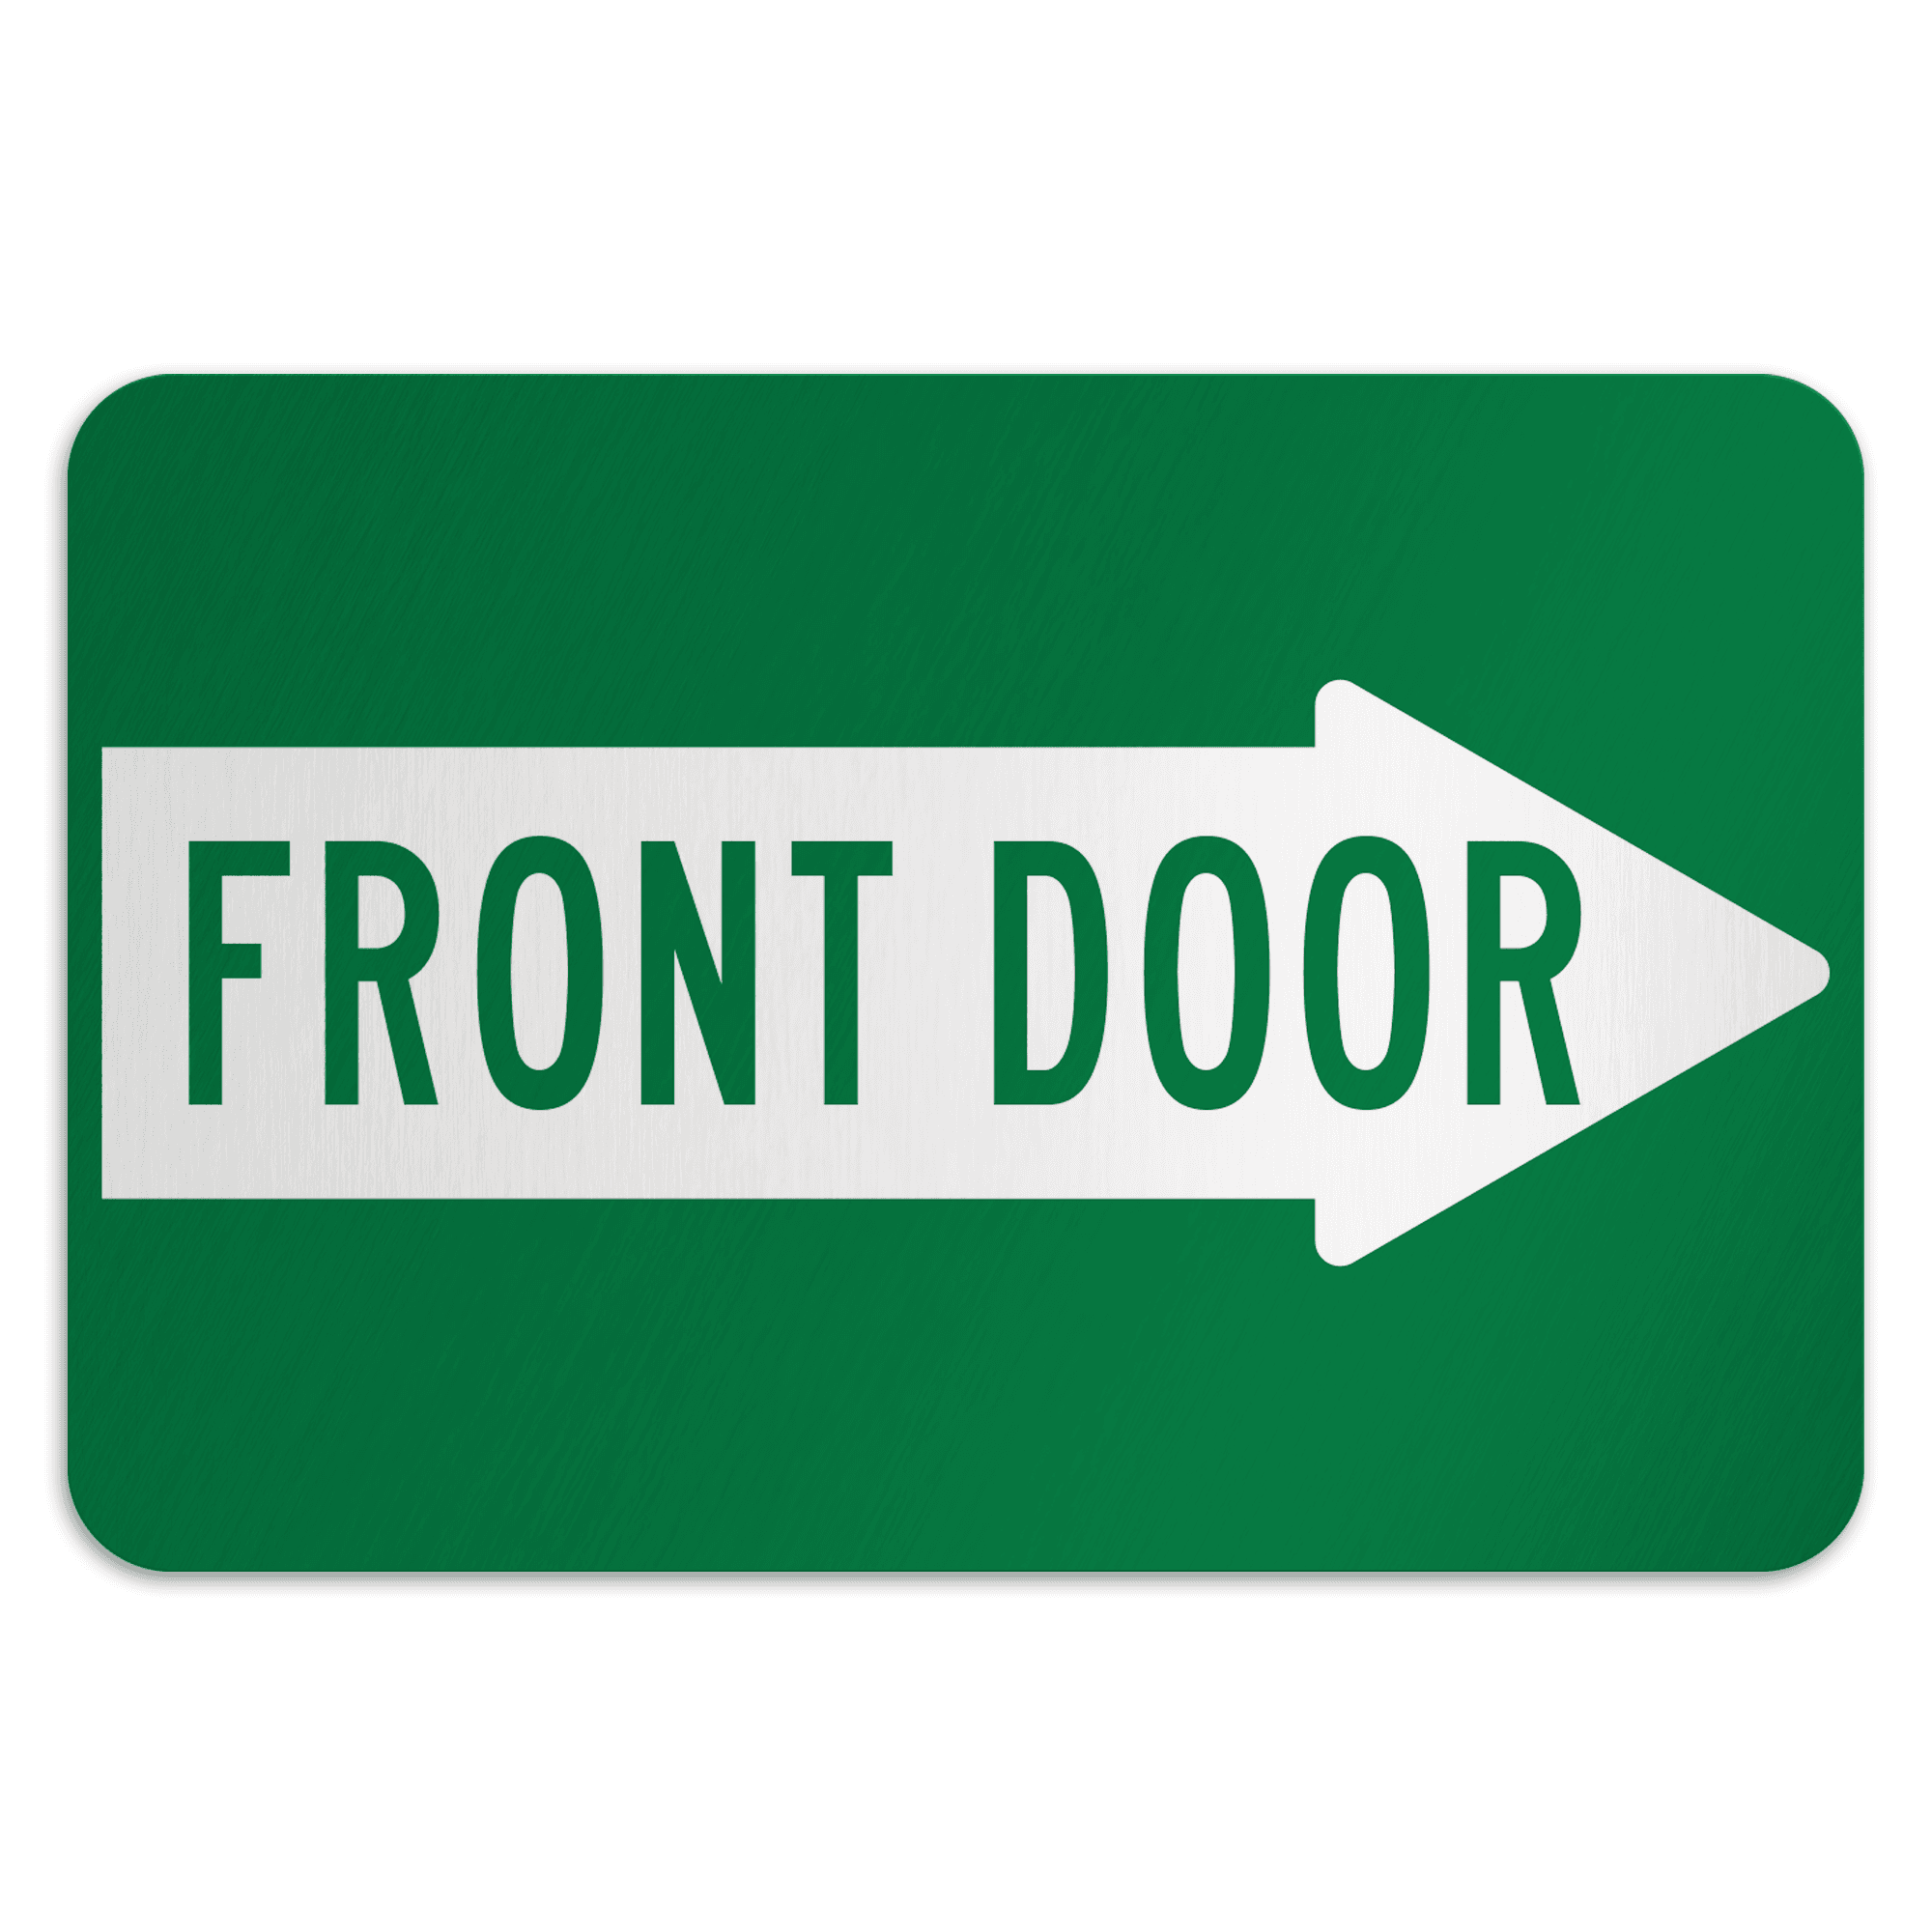 FRONT DOOR RIGHT ARROW - American Sign Company